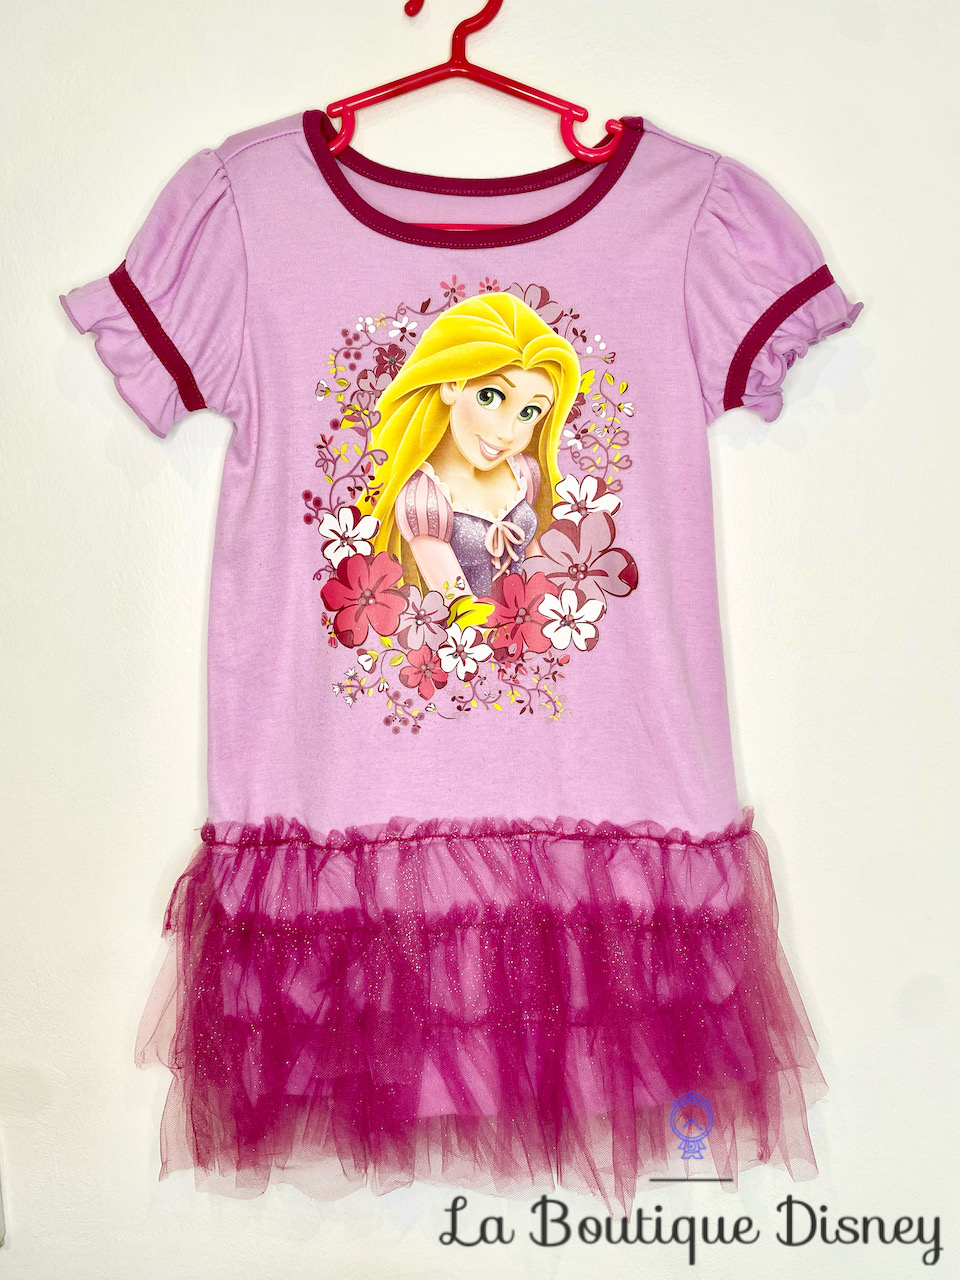 Robe Raiponce Disney Store taille 4 ans princesse rose violet fleurs tutu